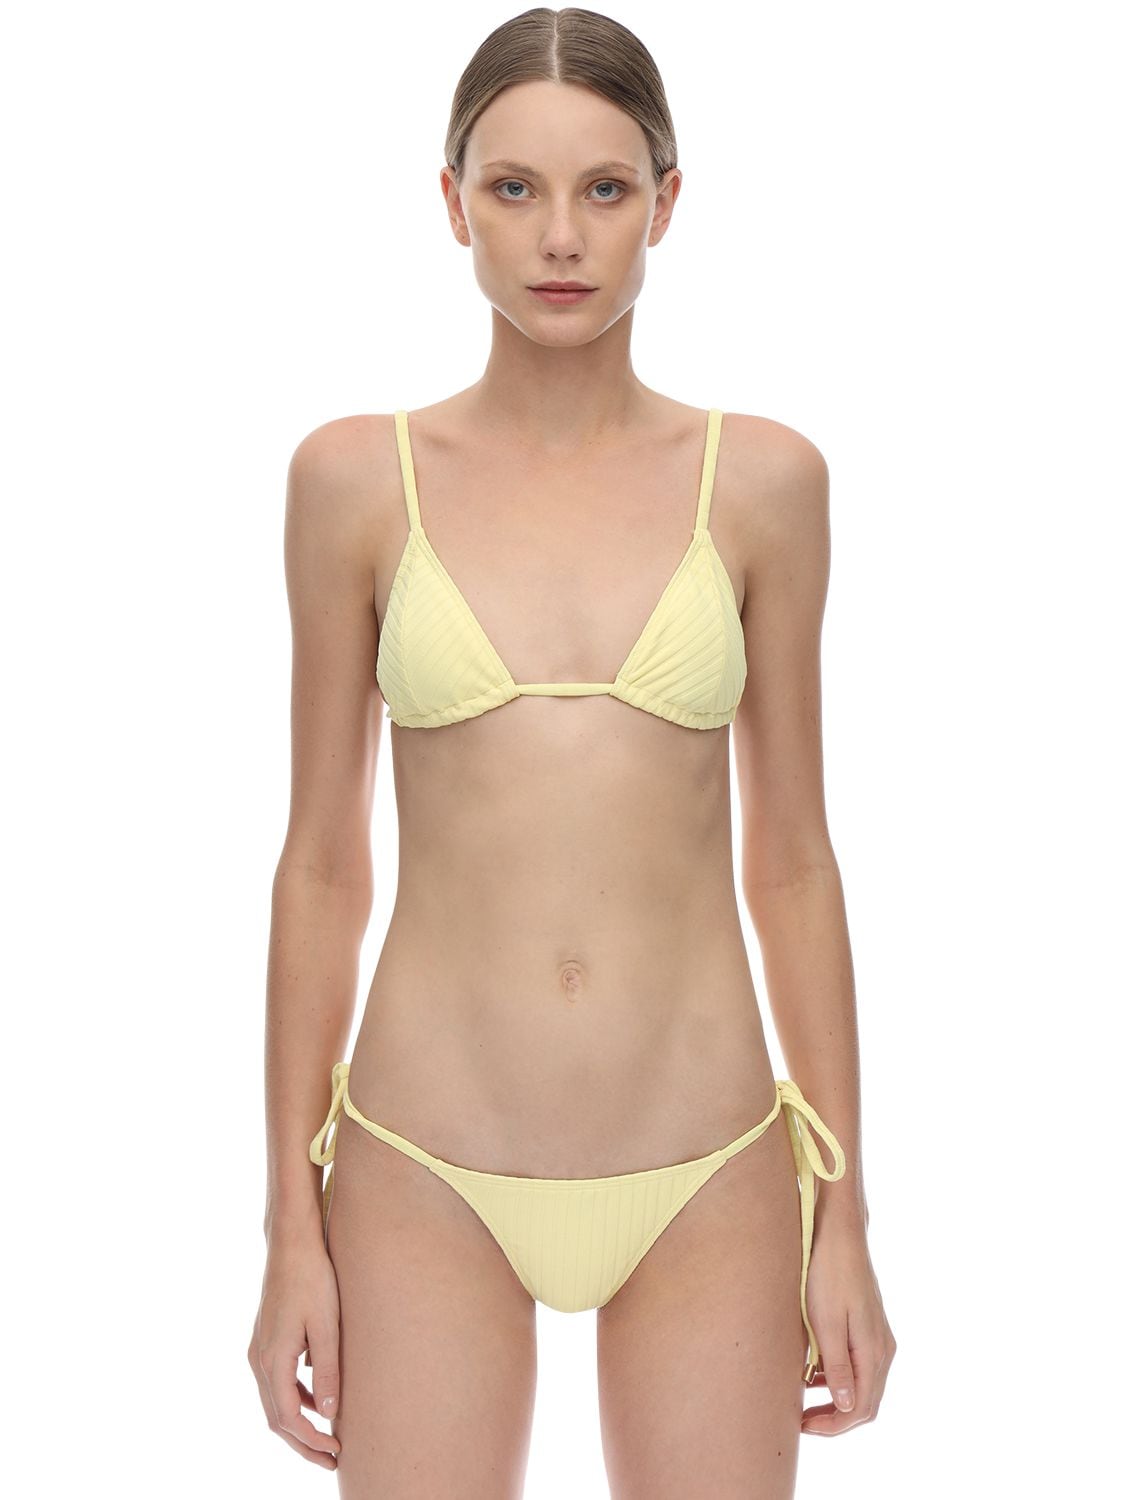 Banana Triangle Ribbed Bikini Top